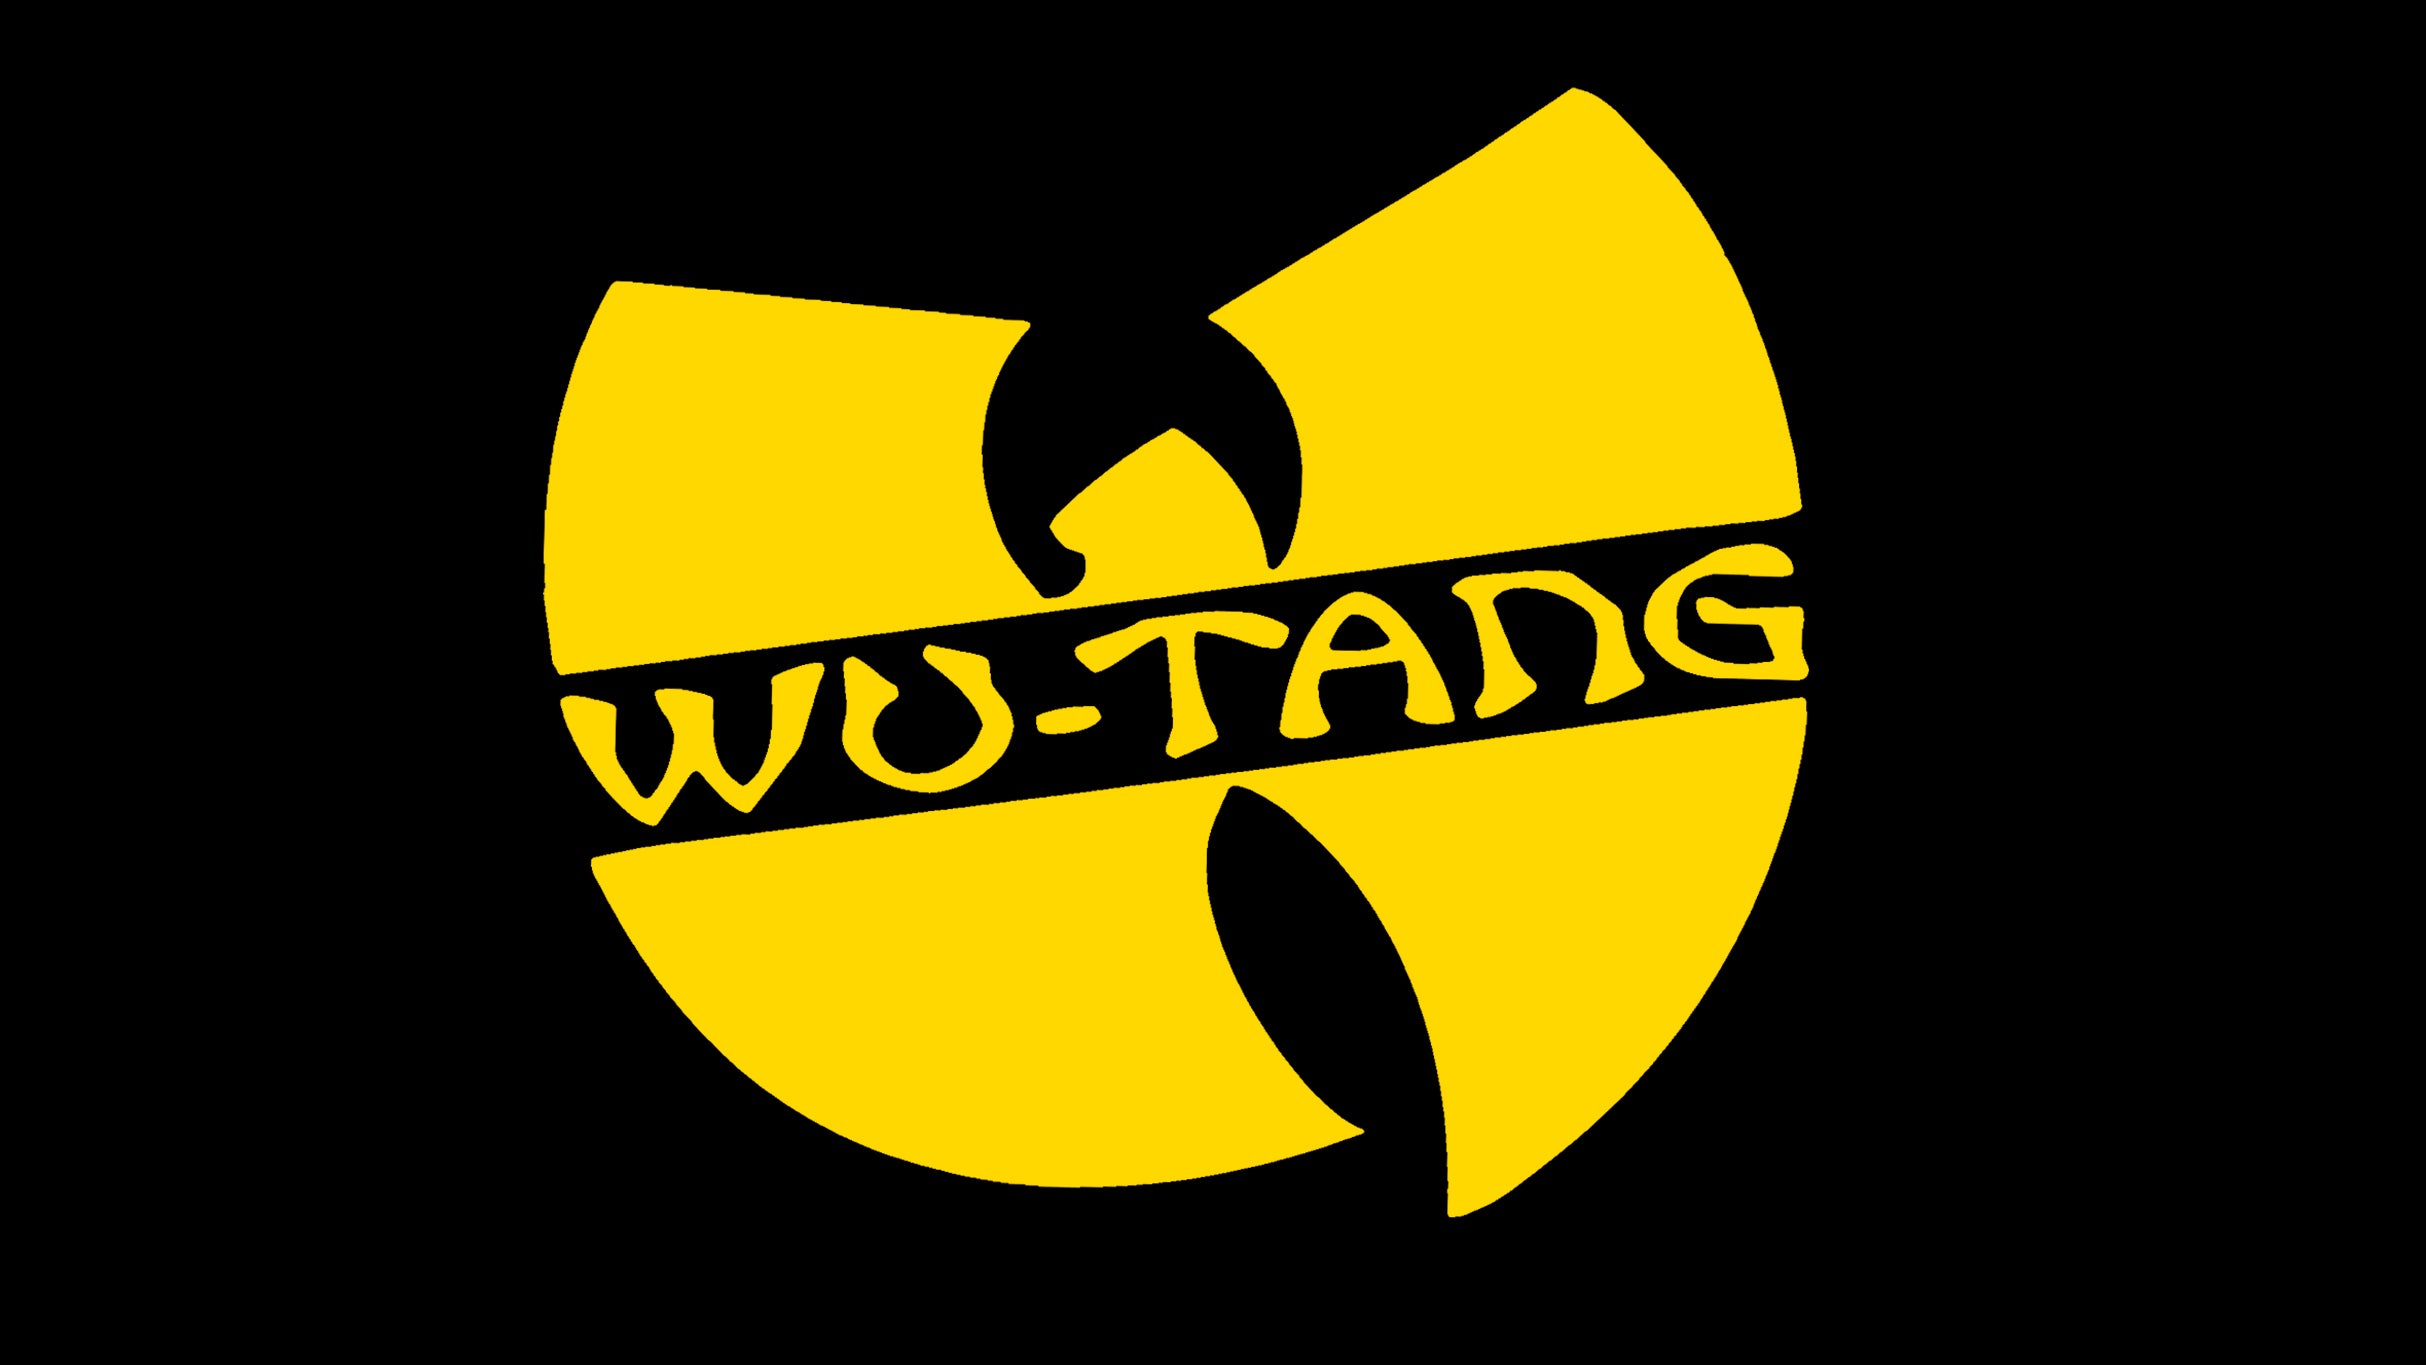 Wu-Tang Clan & Nas: NY State Of Mind Tour